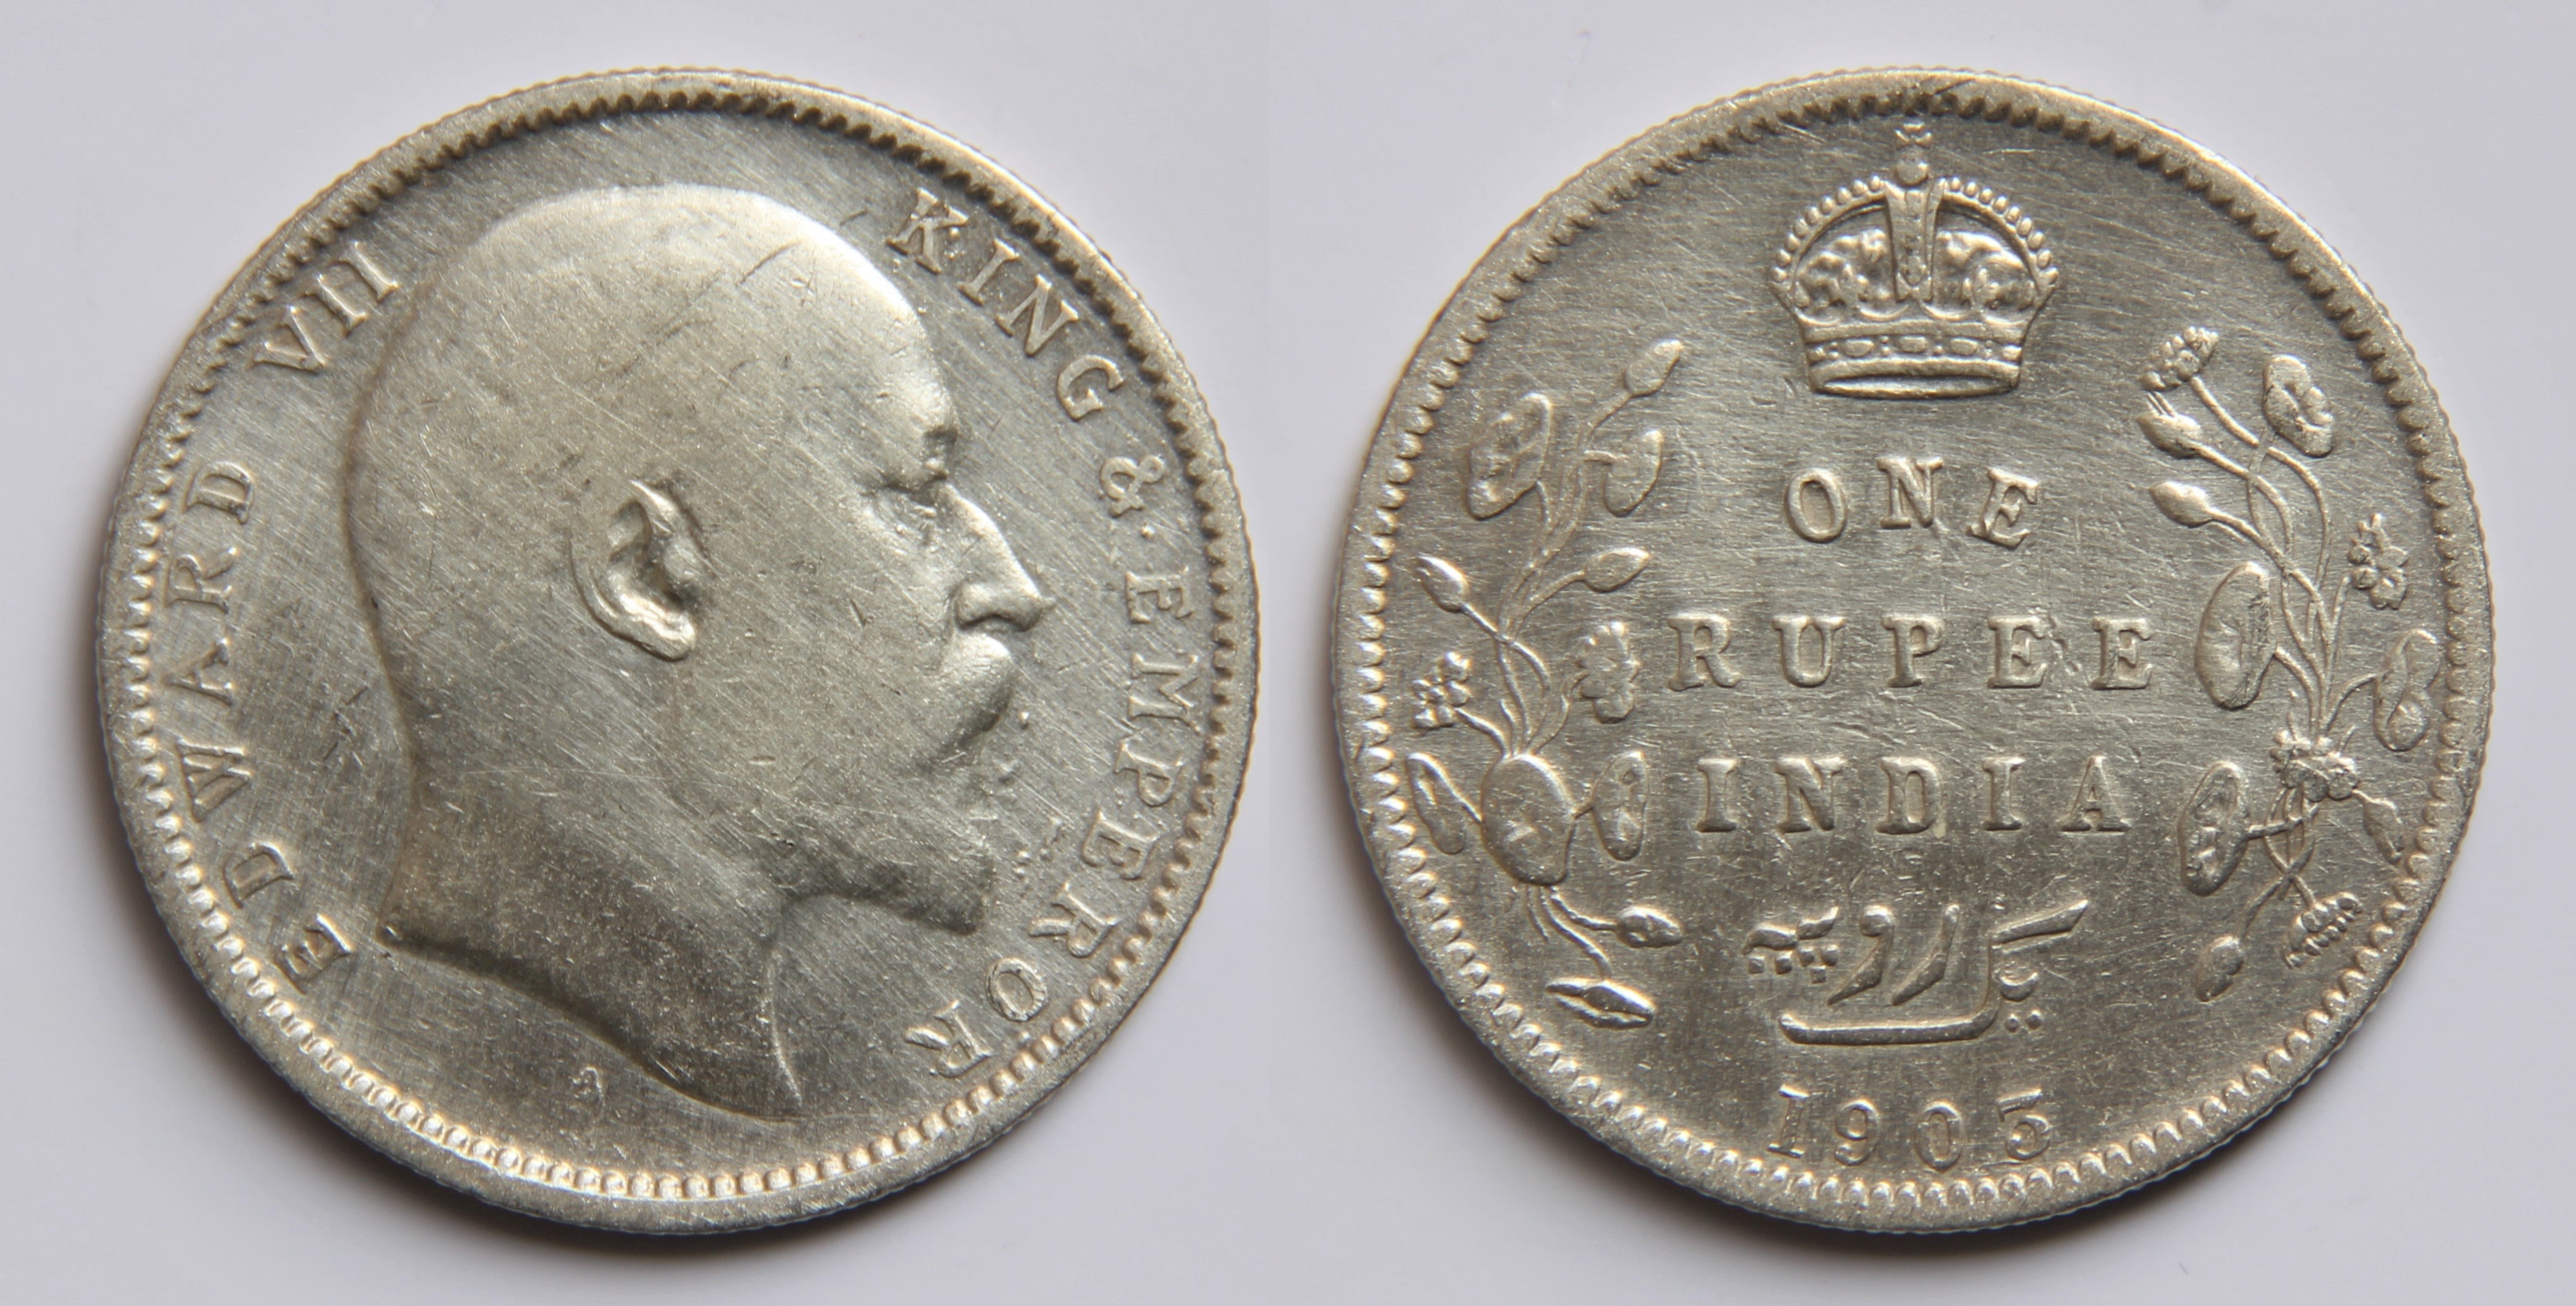 File:1 Indian rupee (1905).jpg - Wikimedia Commons